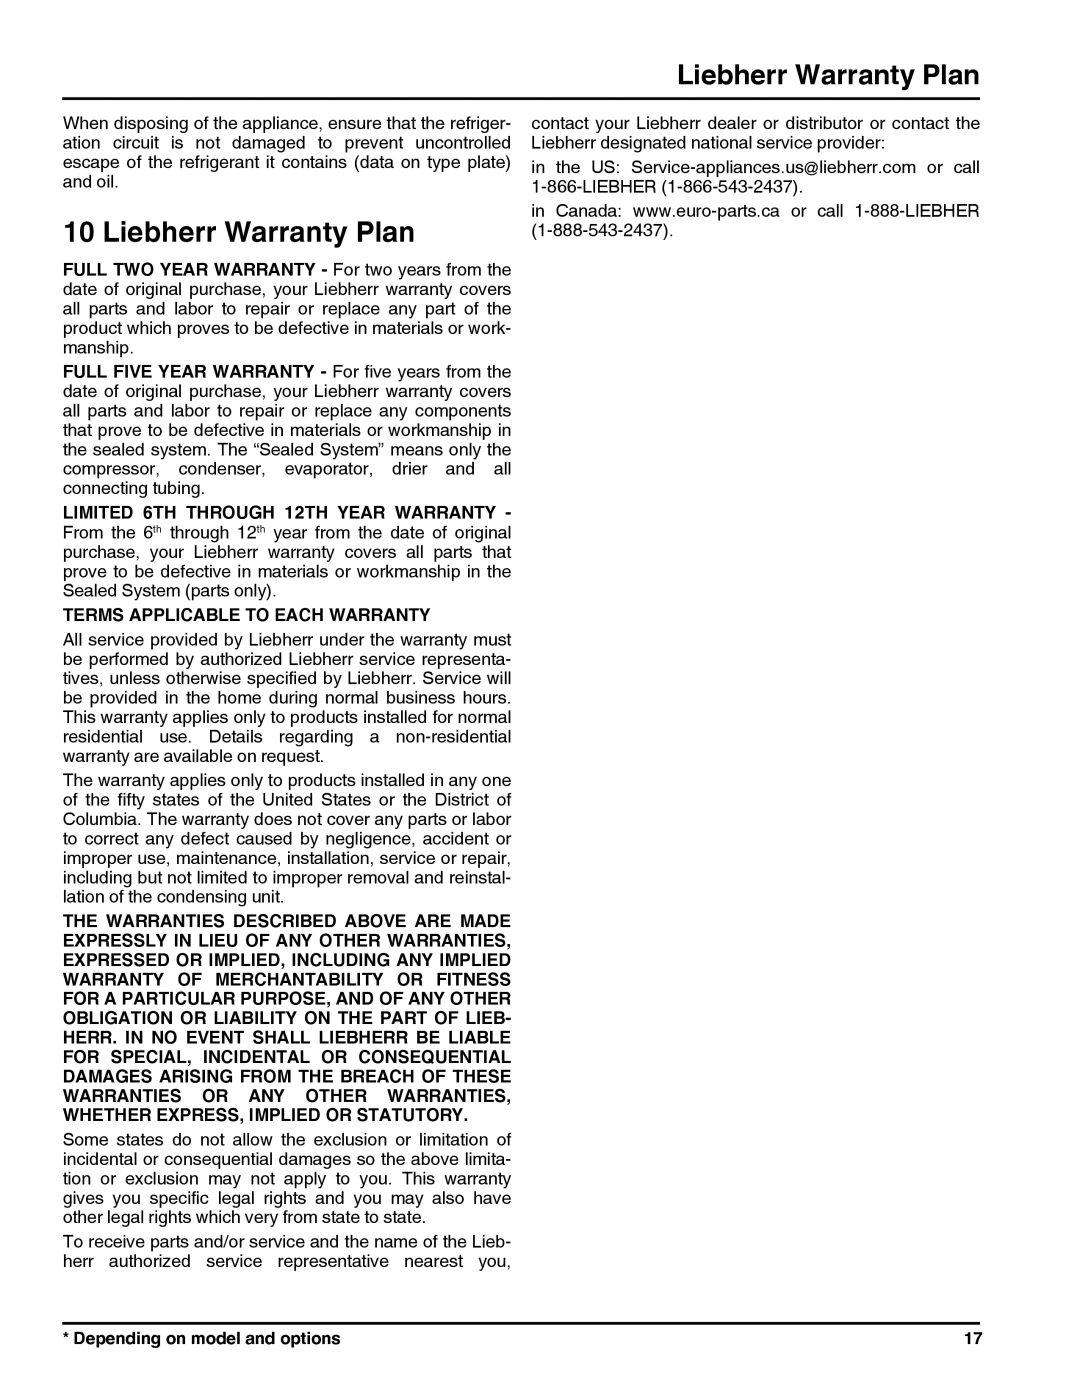 Liebherr F1051, FI1051 manual Liebherr Warranty Plan 